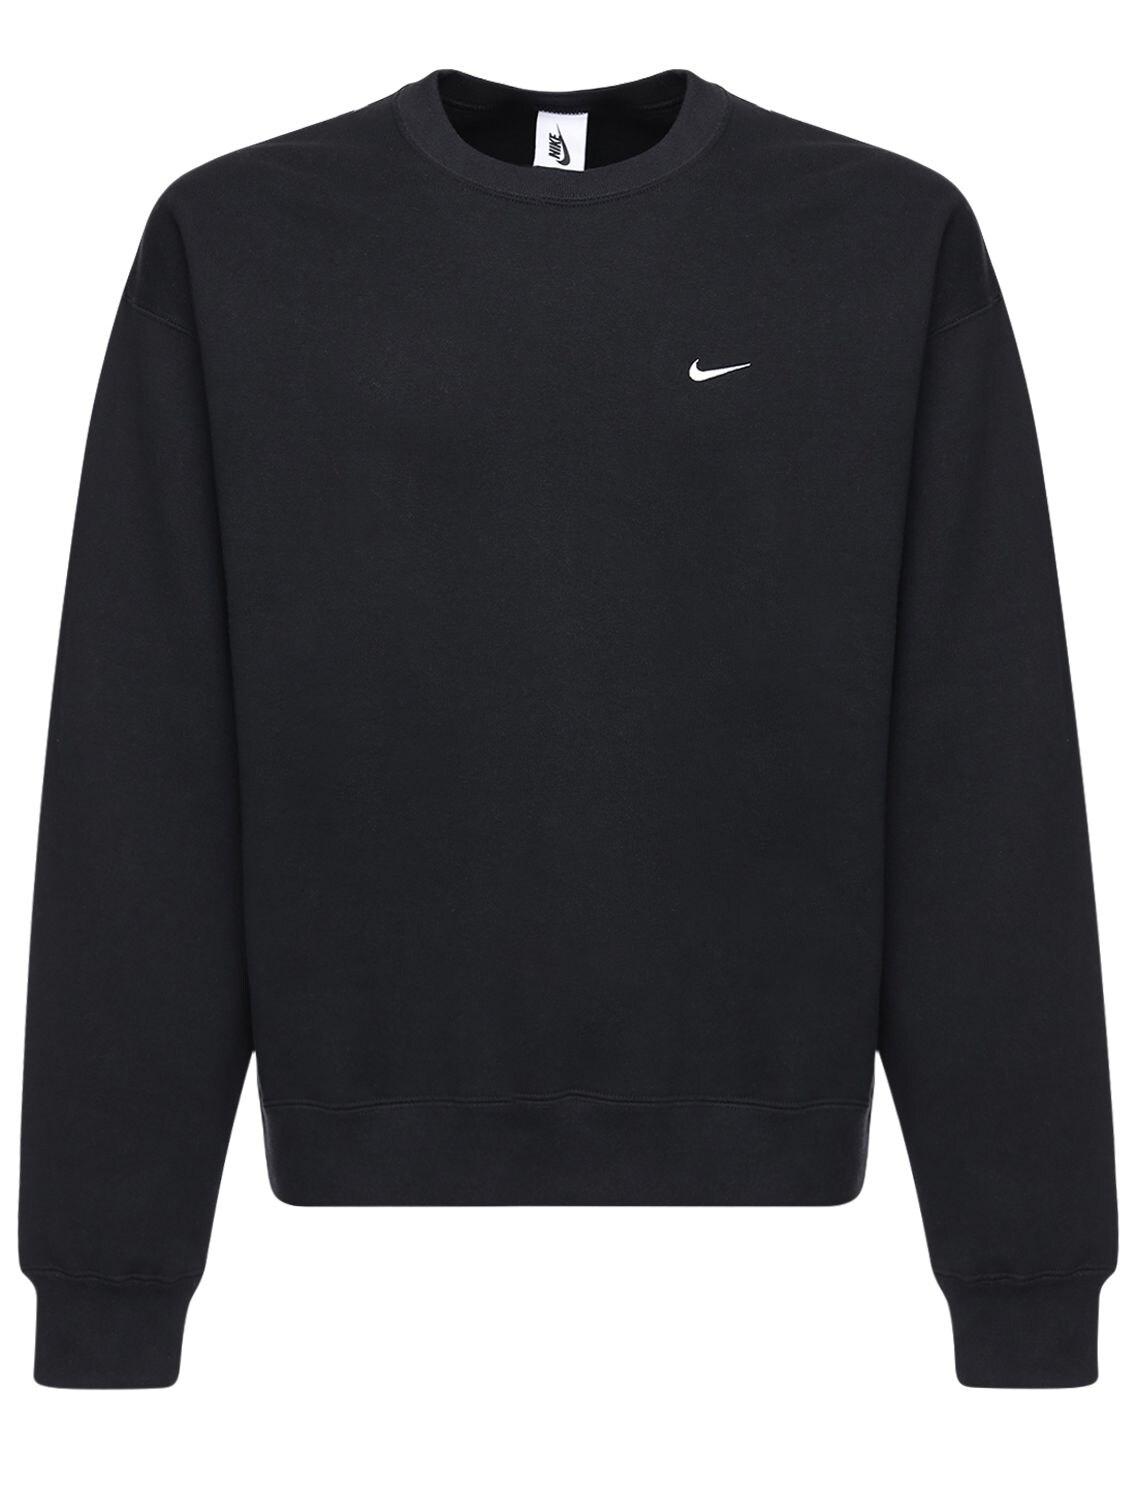 Nike Lab Crewneck Sweatshirt in Black for Men - Lyst